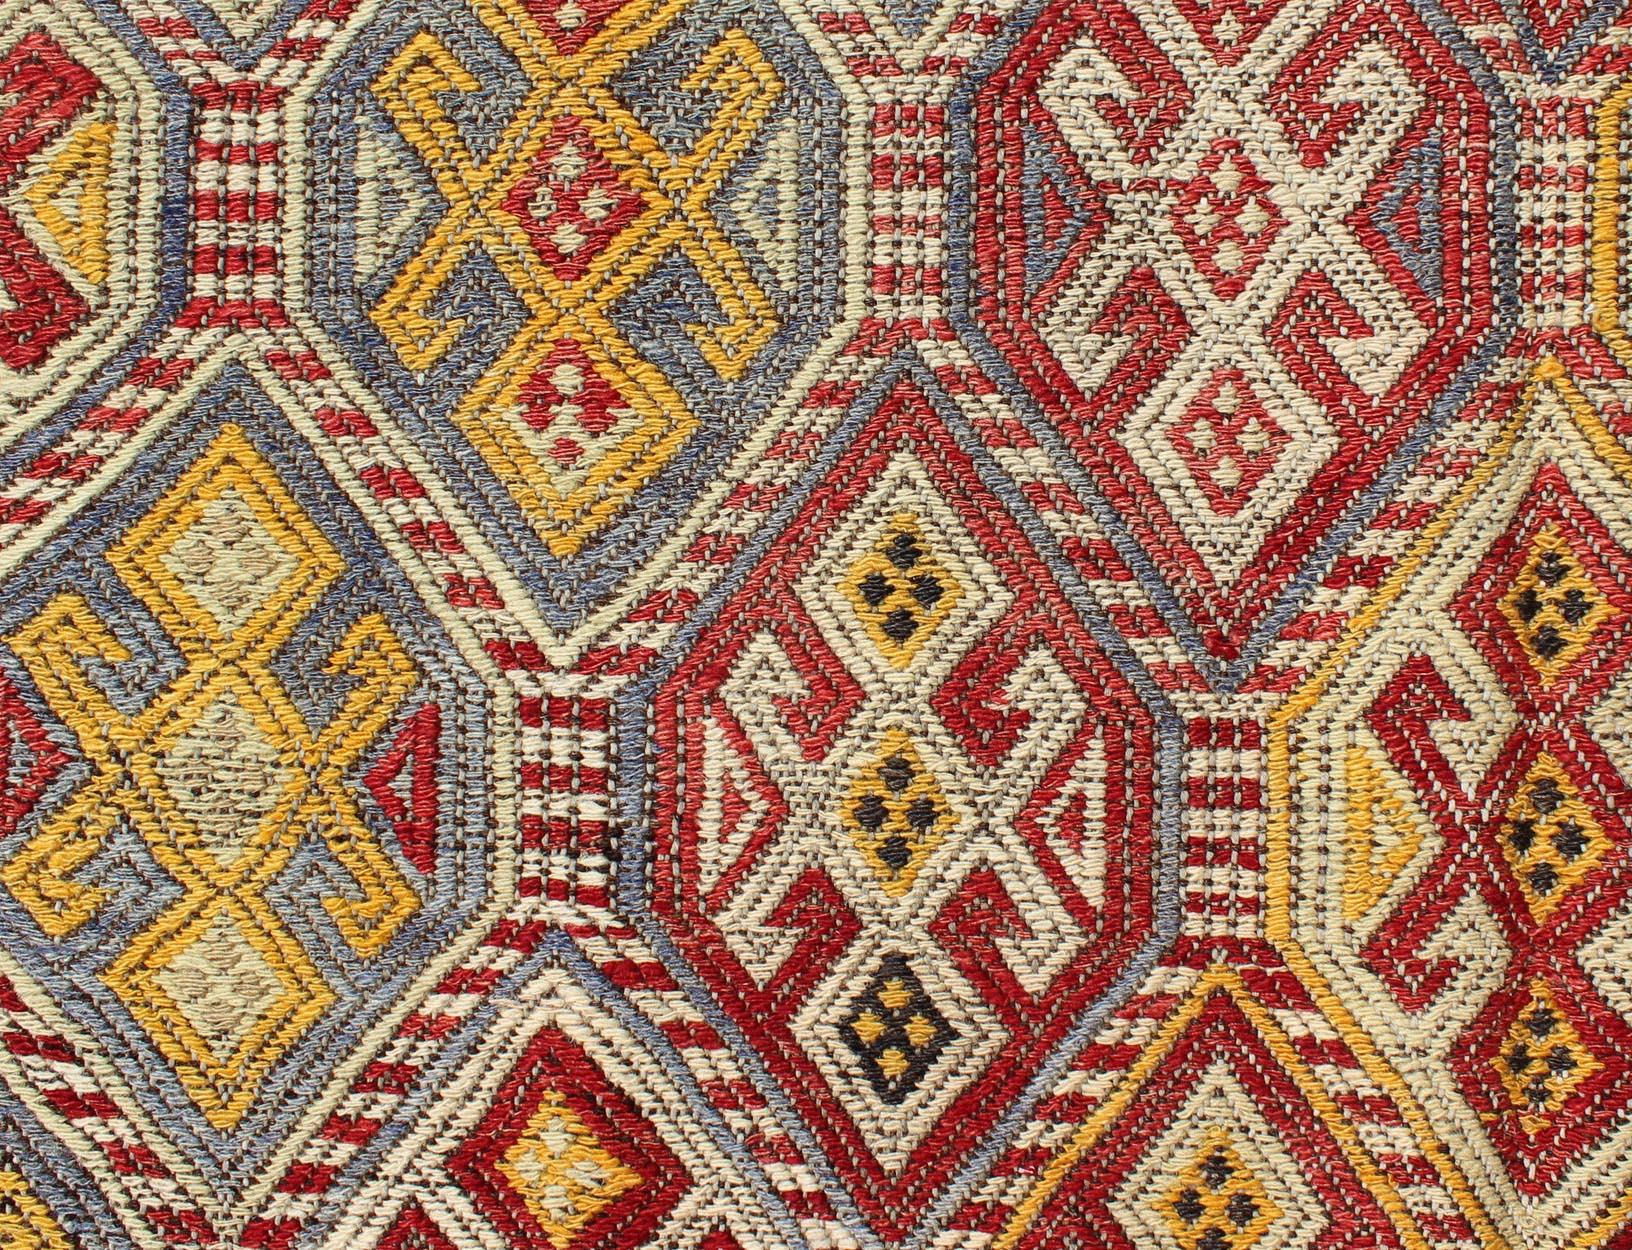 Wool Unique Turkish Kilim Rug with Multi-Colored Diamond Geometric Shapes